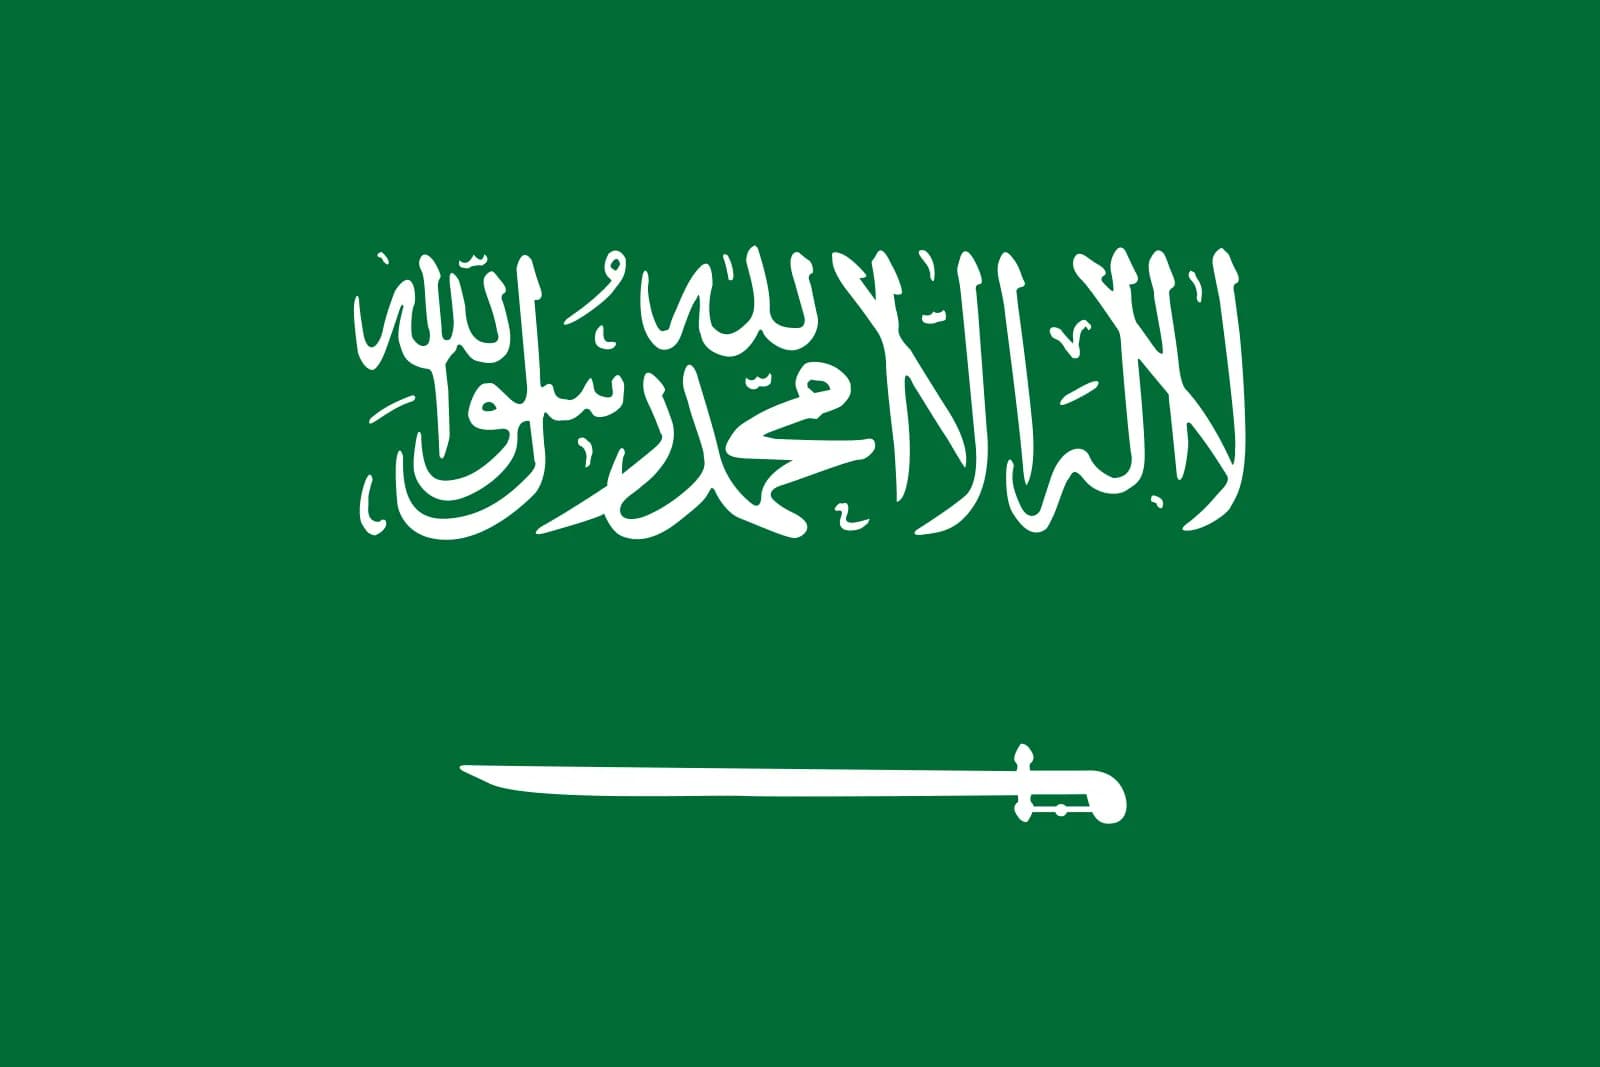 Нижний колонтитул флага Саудовской Арбии